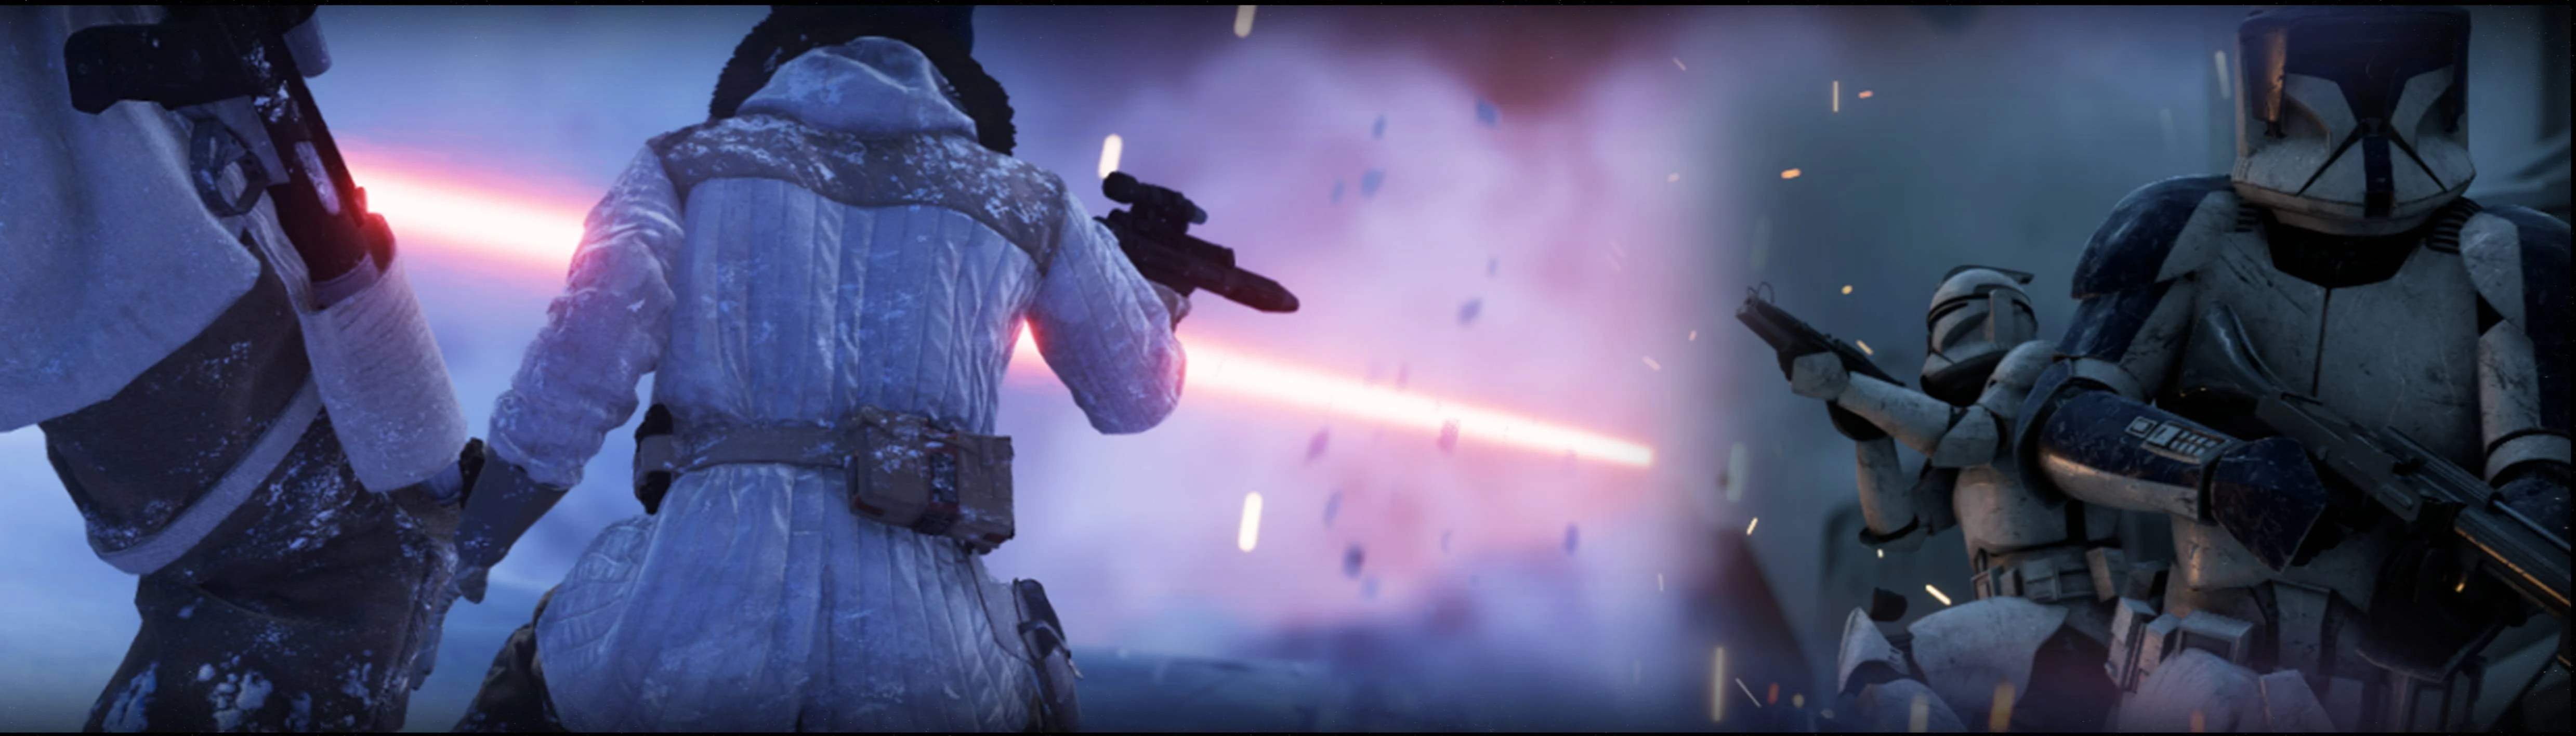 Battlefront 2 Remaster Project by Harrisonfog at Star Wars: Battlefront II  Nexus - Mods and community